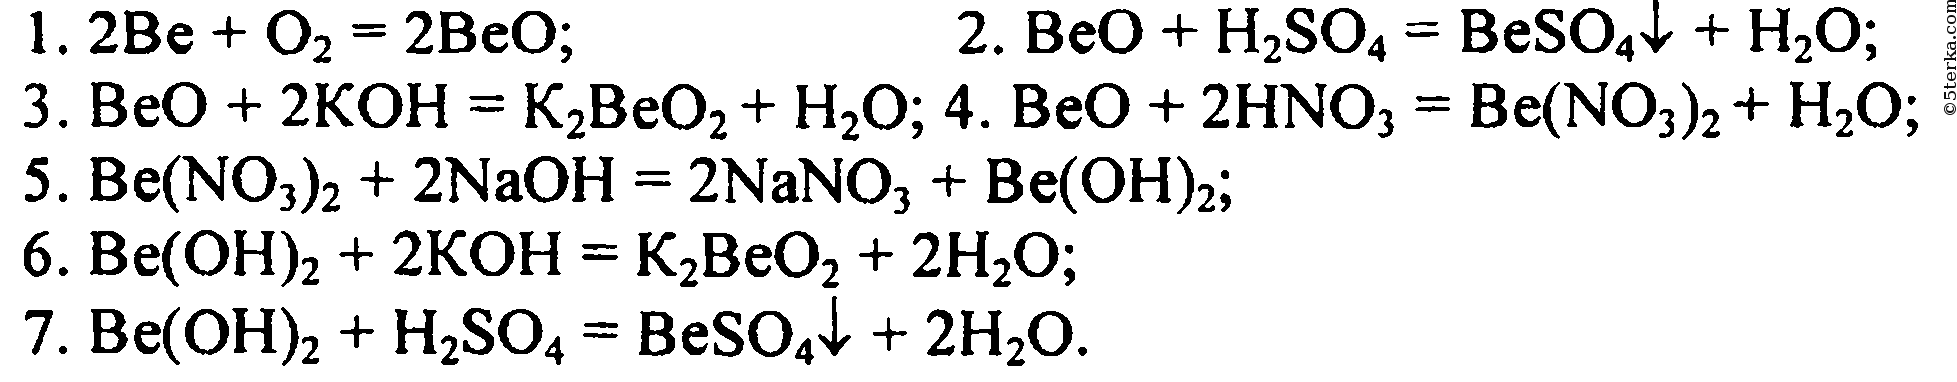 Naoh реагирует с ba oh 2. Уравнения реакций бериллия. Превращение бериллия. Цепочка превращений с бериллием. Генетический ряд бериллия с уравнениями реакций.